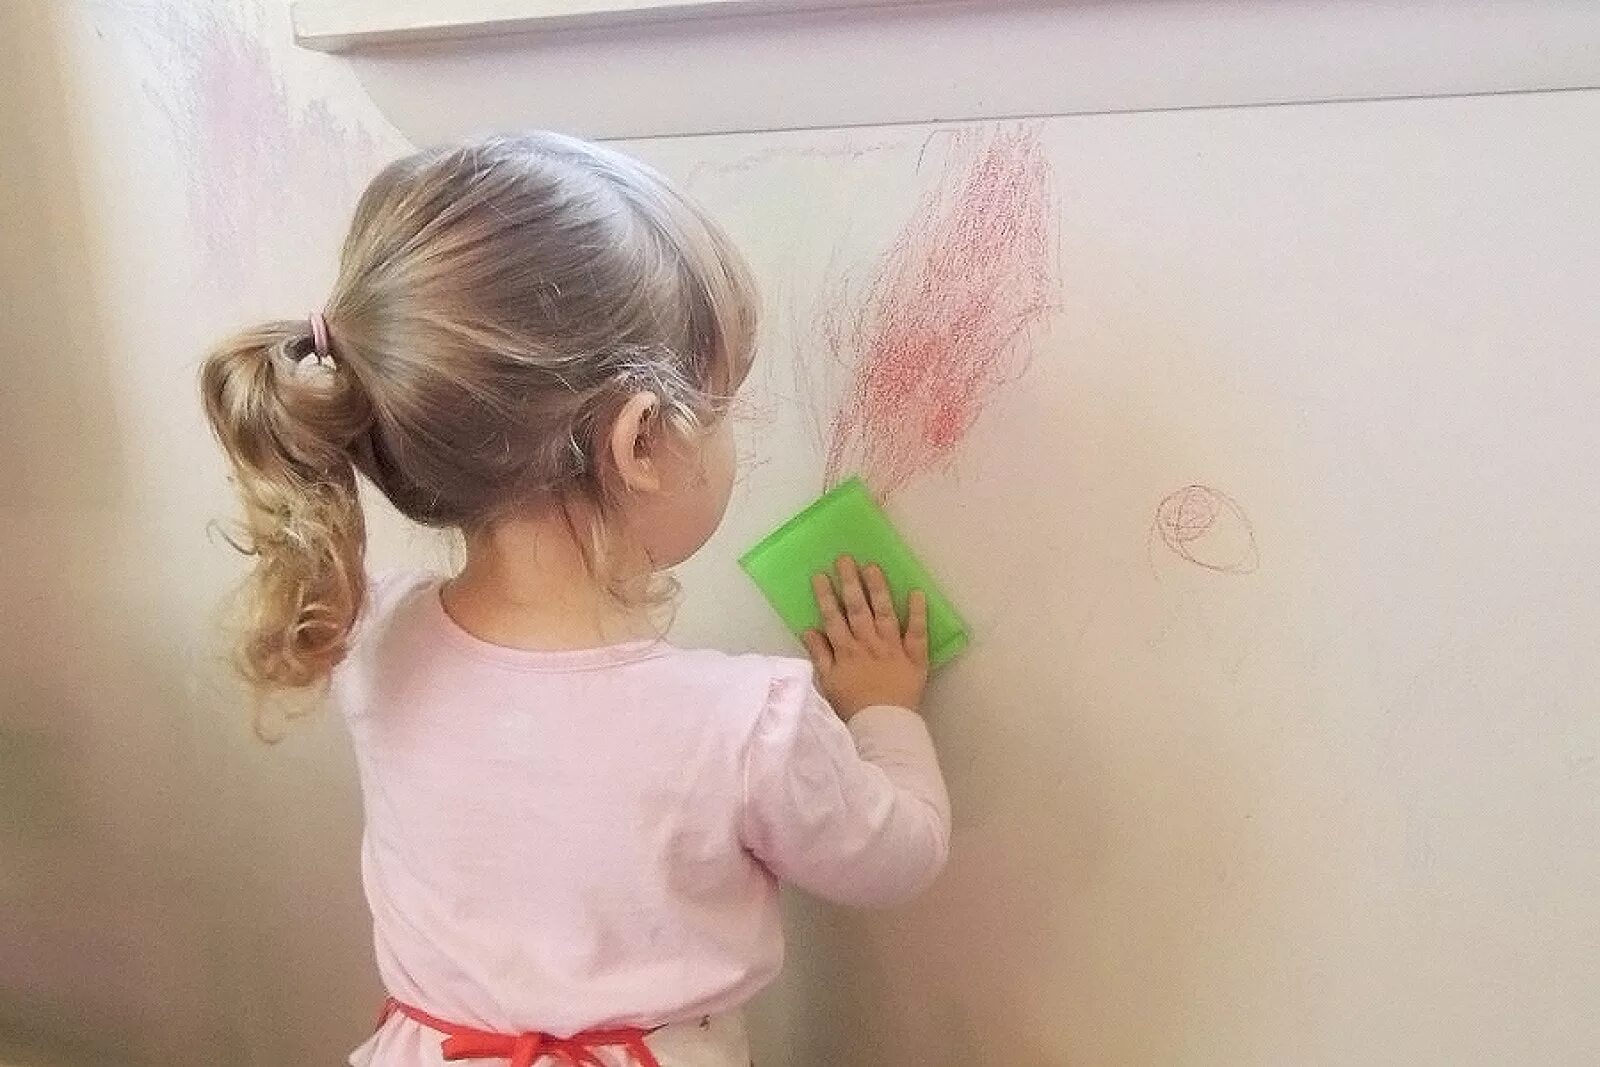 Ребенок рисует на стене. Рисование на обоях с детьми. Ребенок рисует на обоях. Ребенок разрисовал стены.